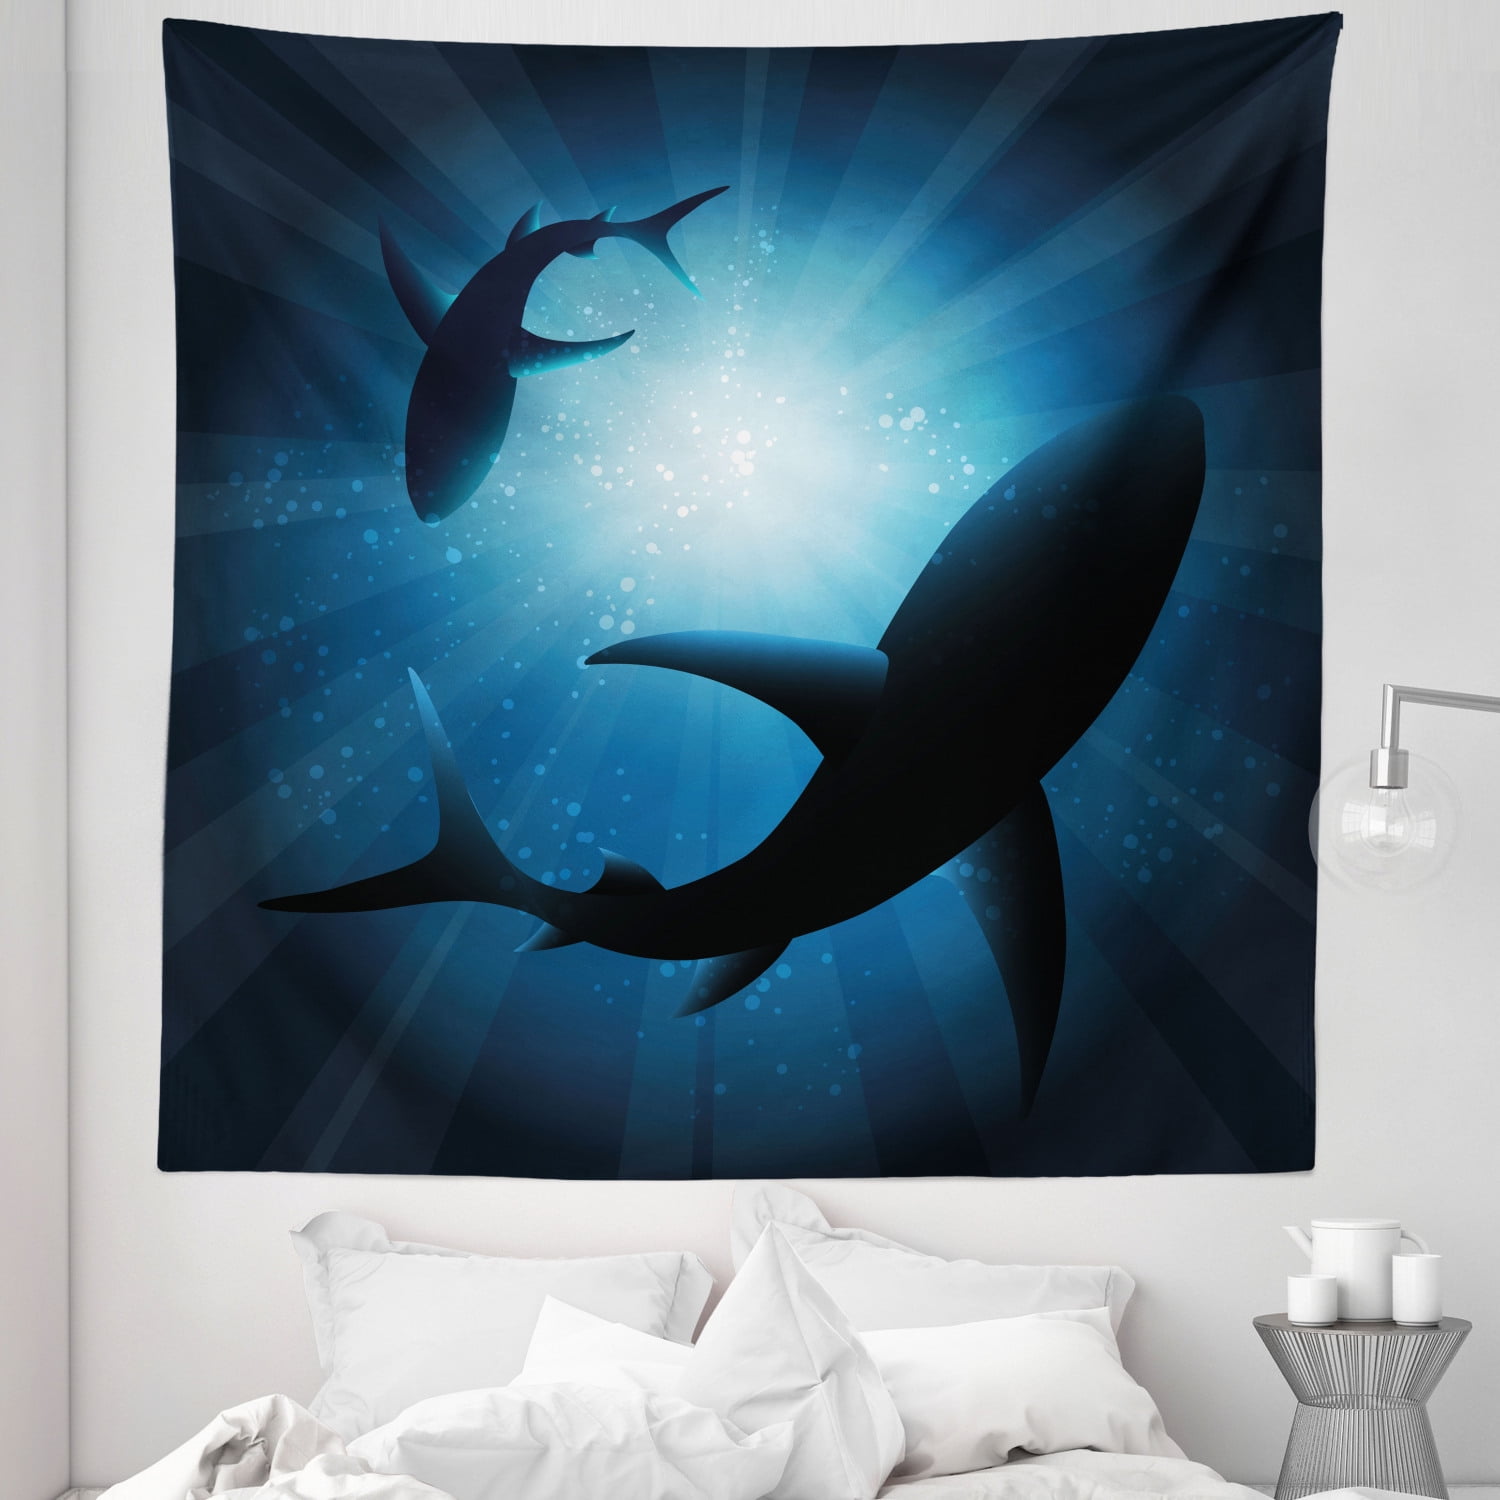 Shark Under the Sea Tapestry Wall Hanging for Living Room Bedroom Dorm Decor 